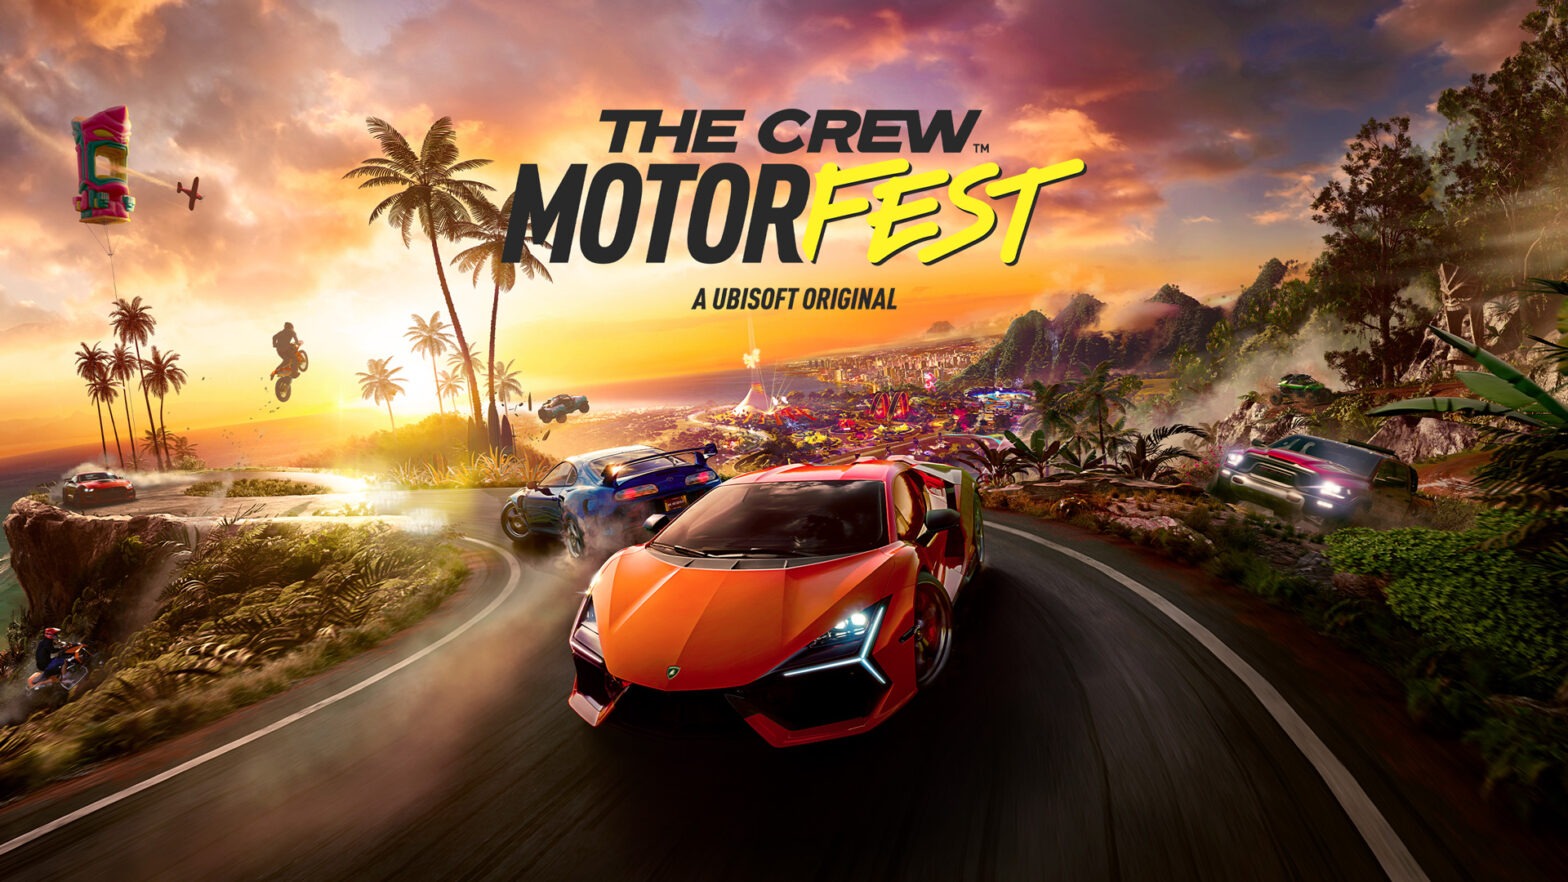 The Crew Motorfest feature image